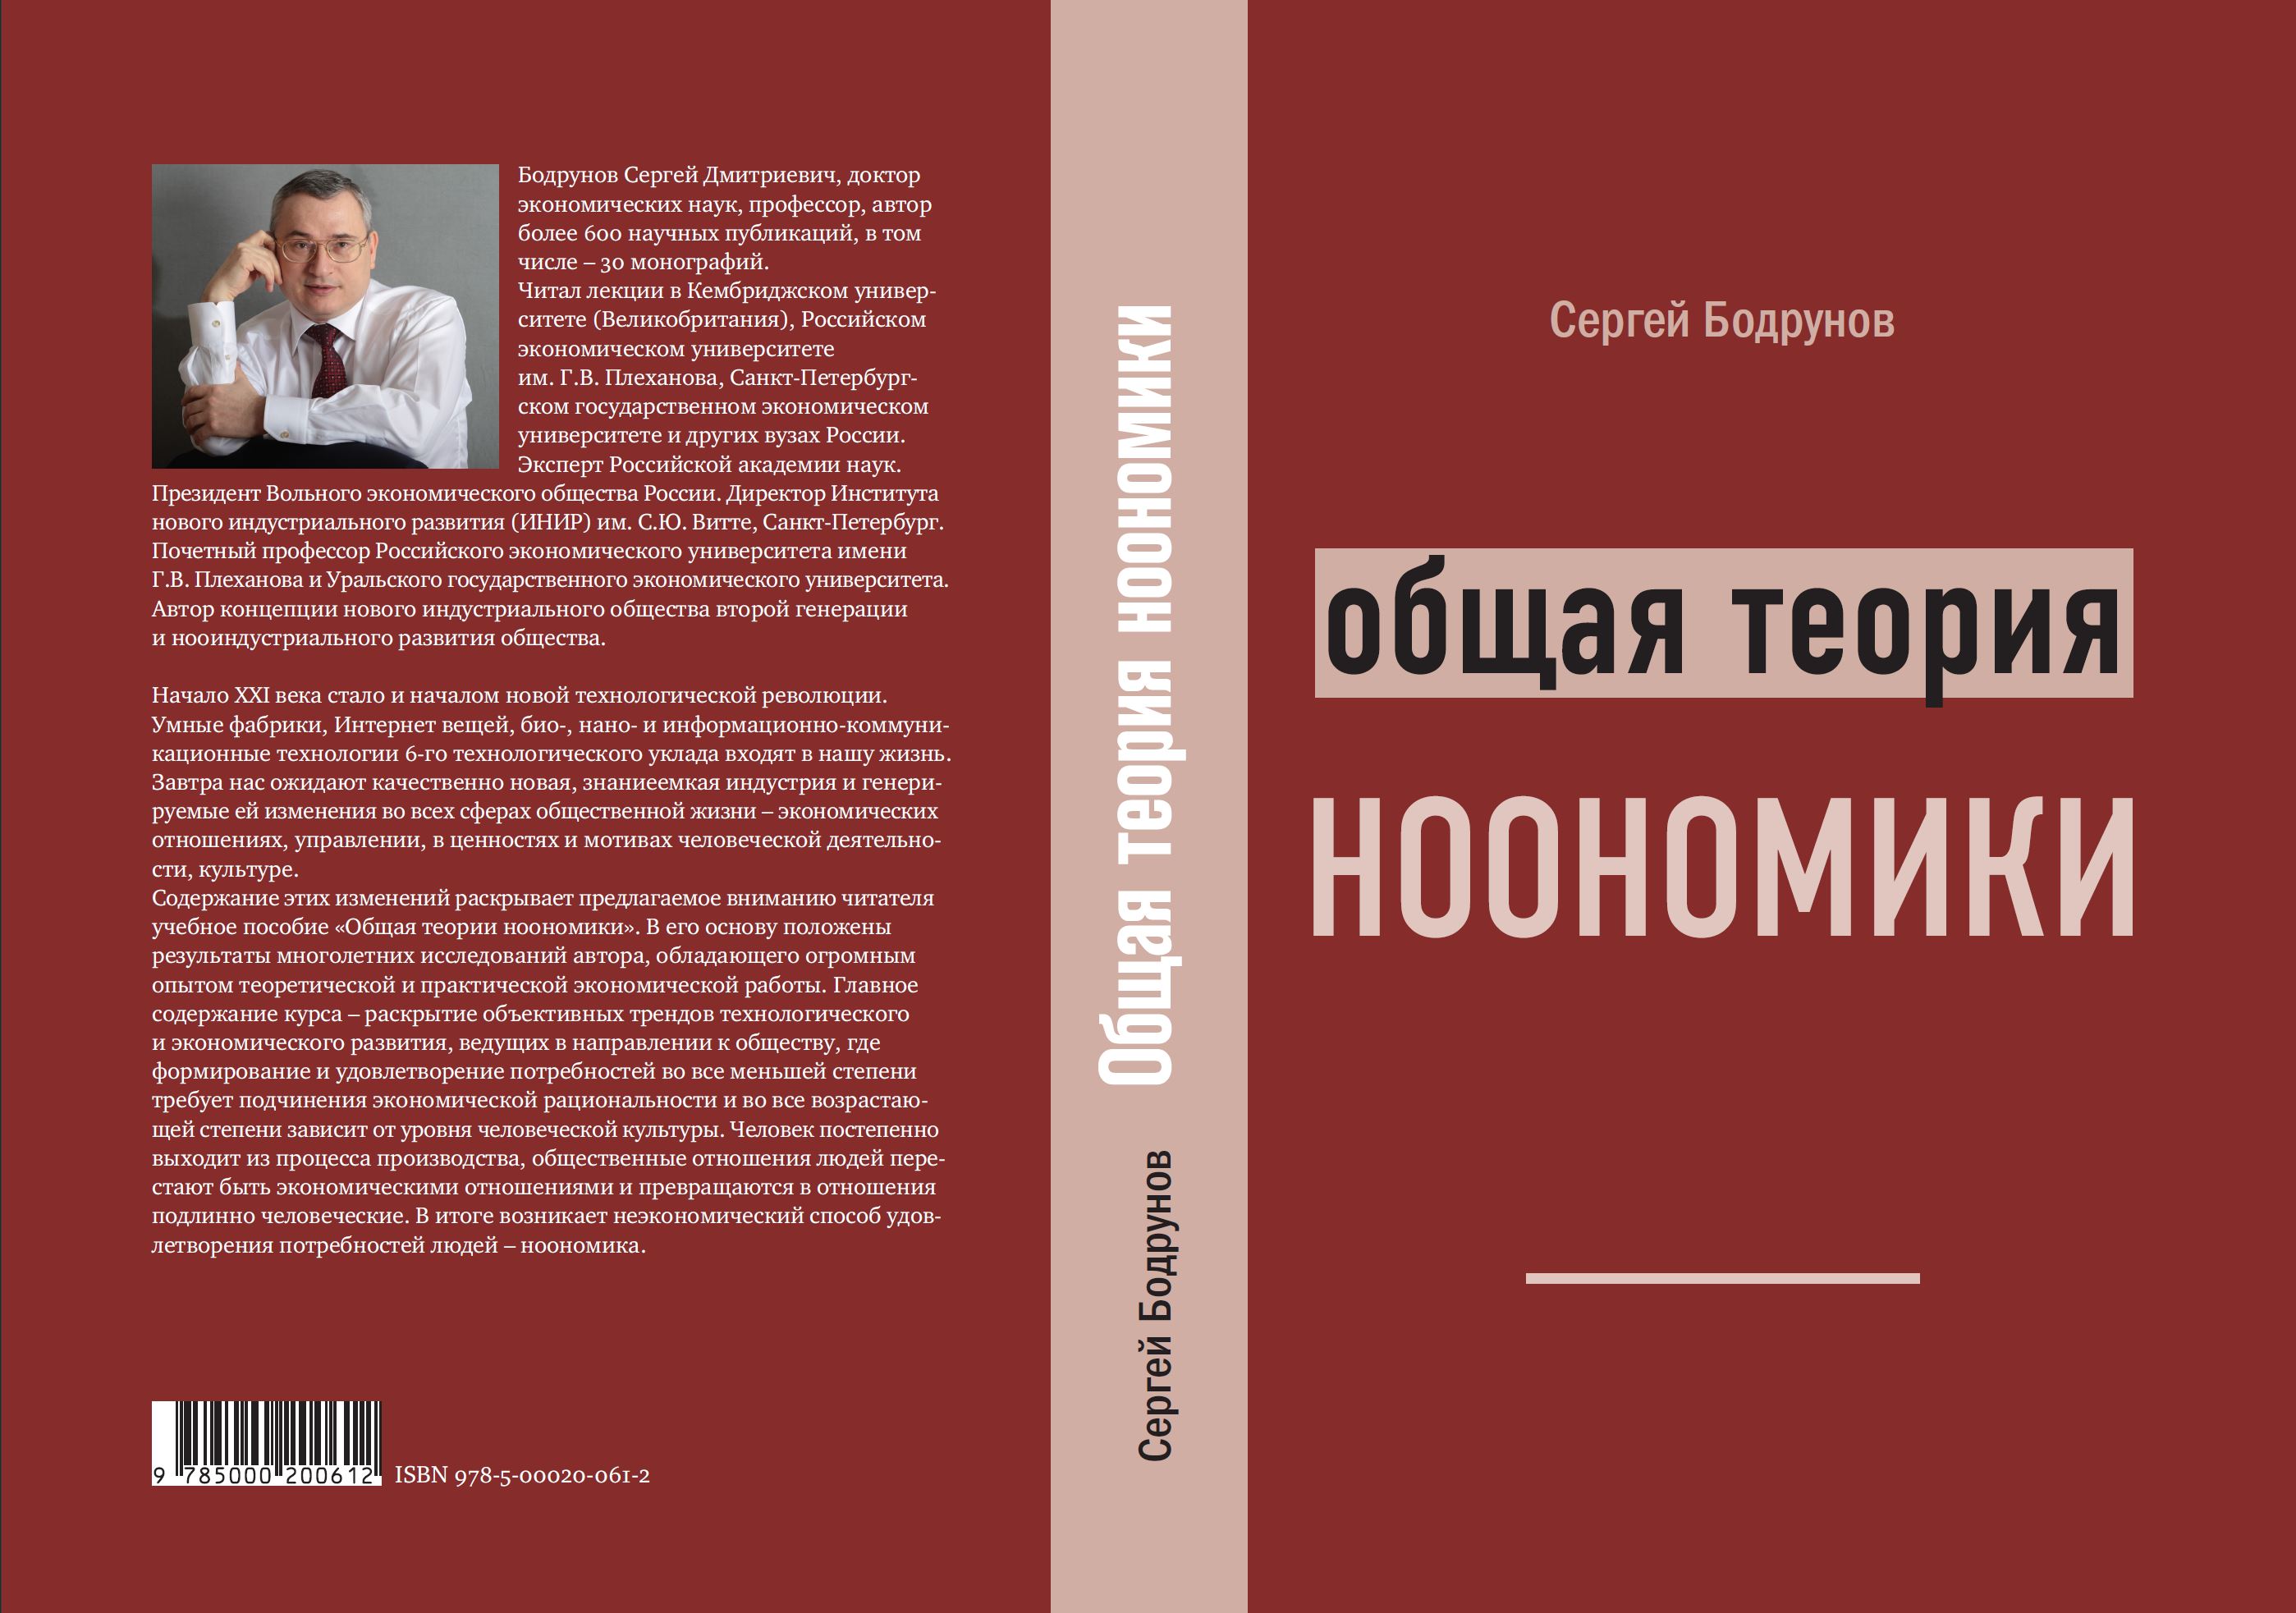 noonomy_textbook_cover